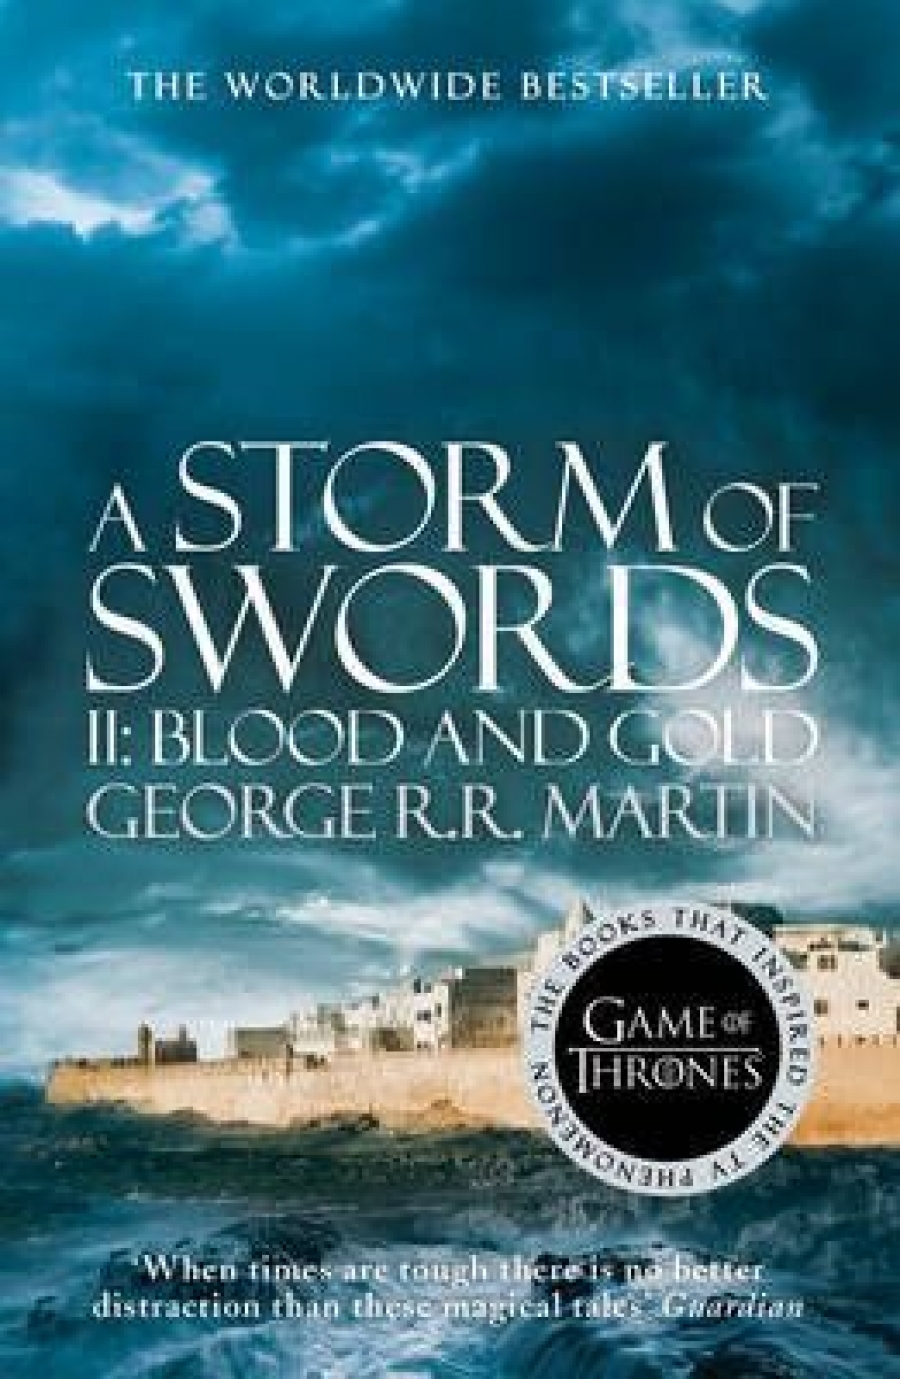 Martin George R. R. Storm Of Swords: Part 2 